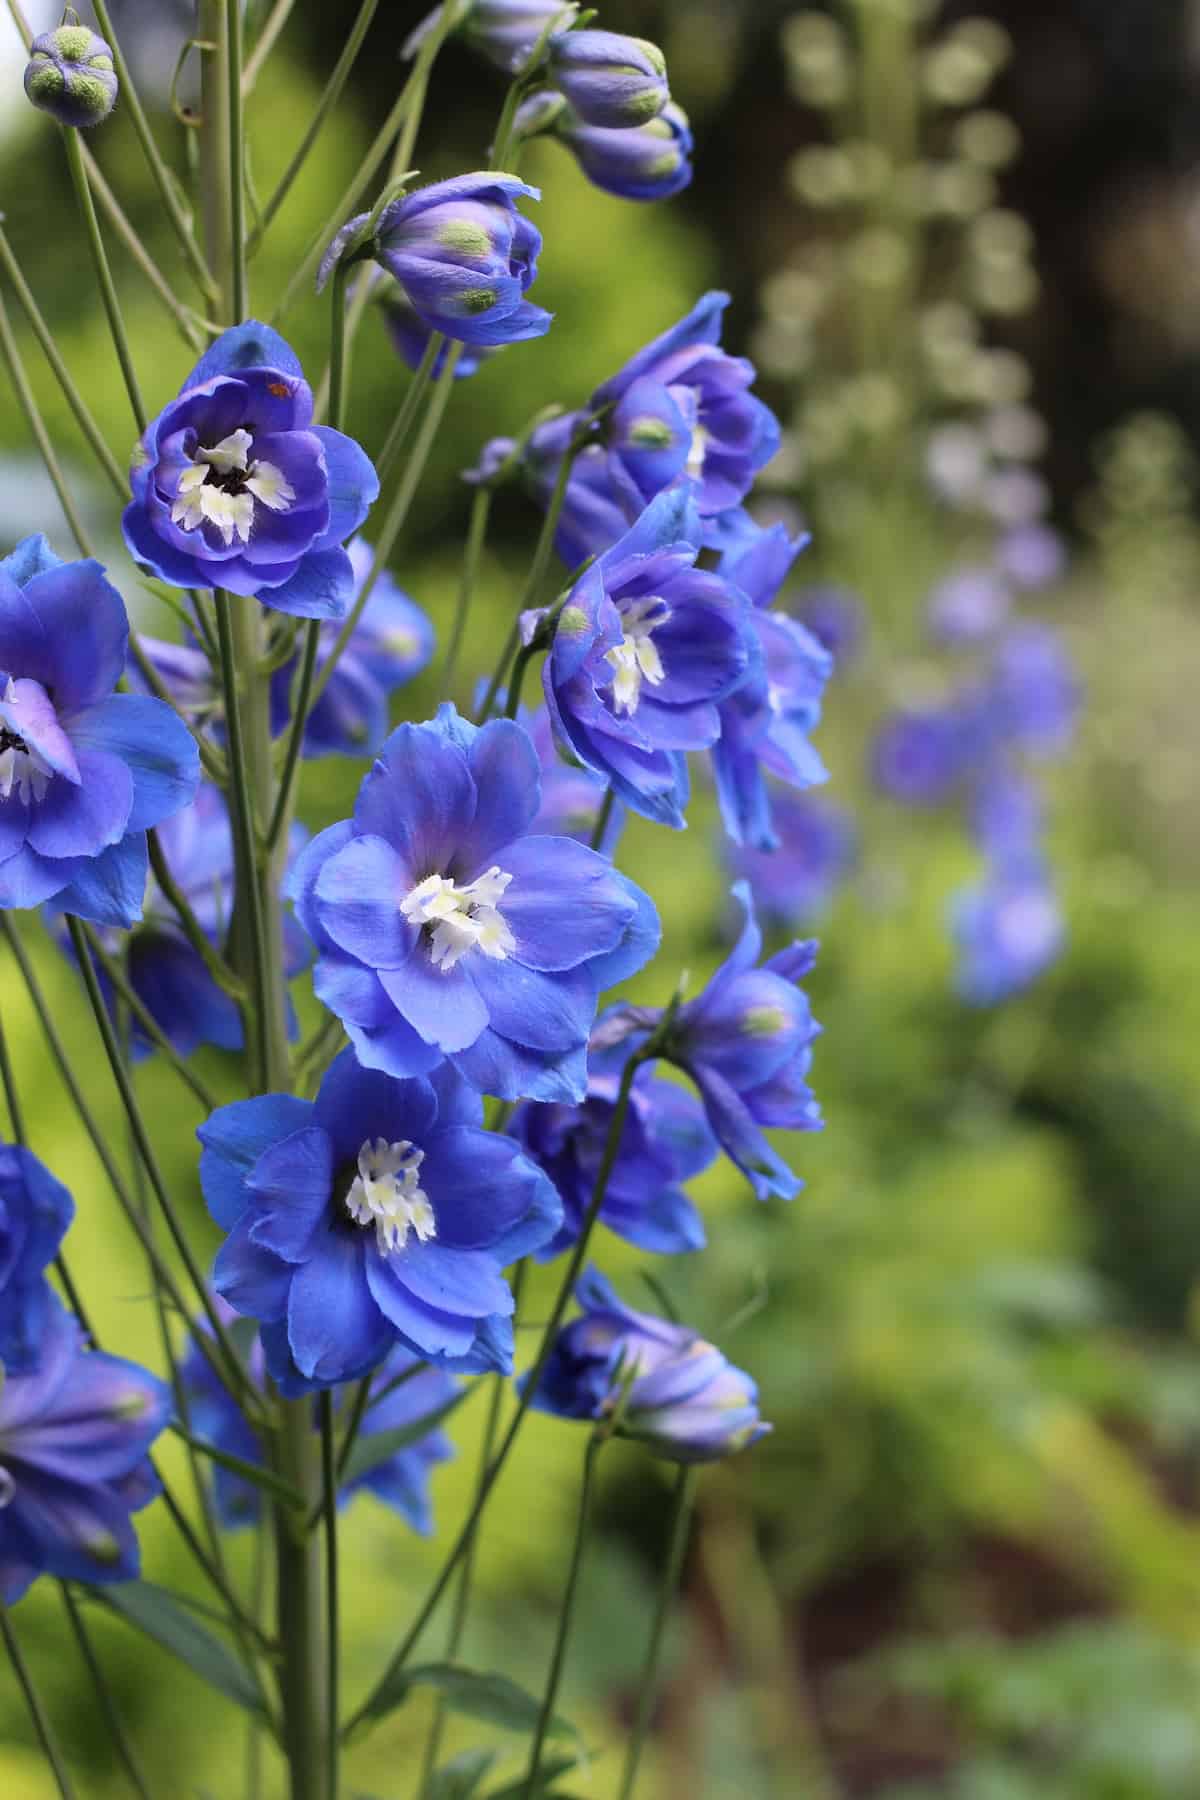 True blue delphinium flowers in garden